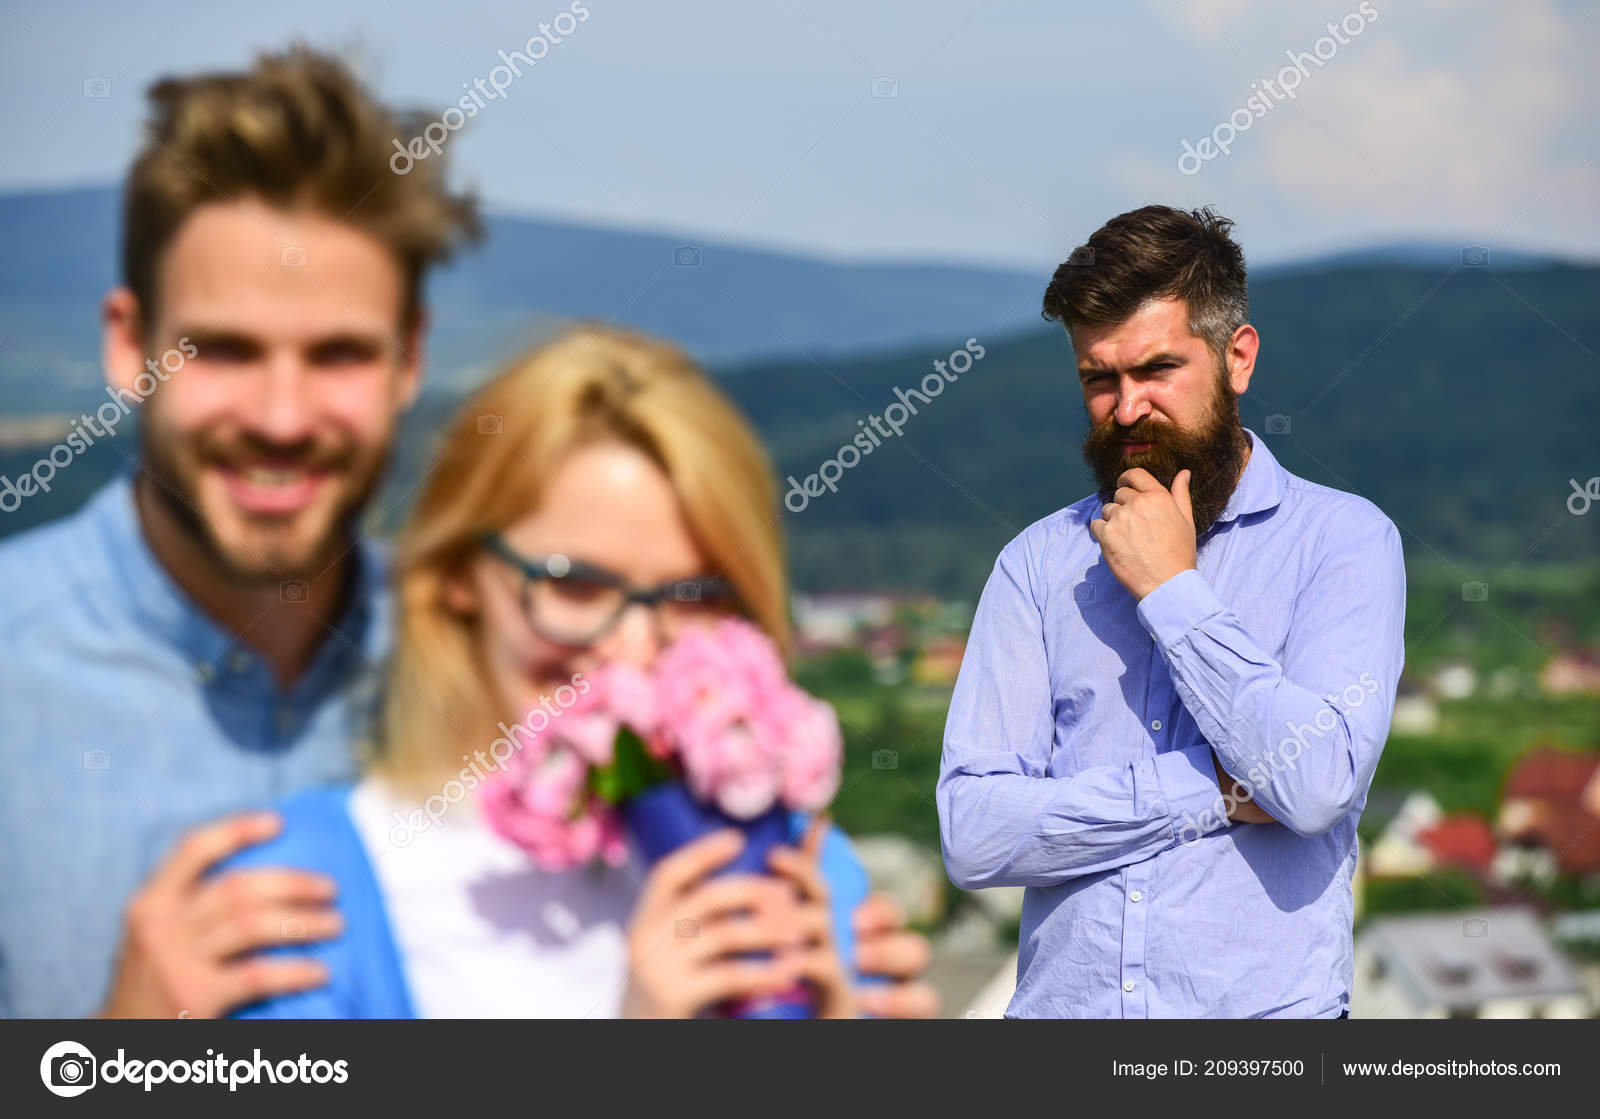 Lovers hugs outdoor flirt romance relations. Infidelity concept image picture